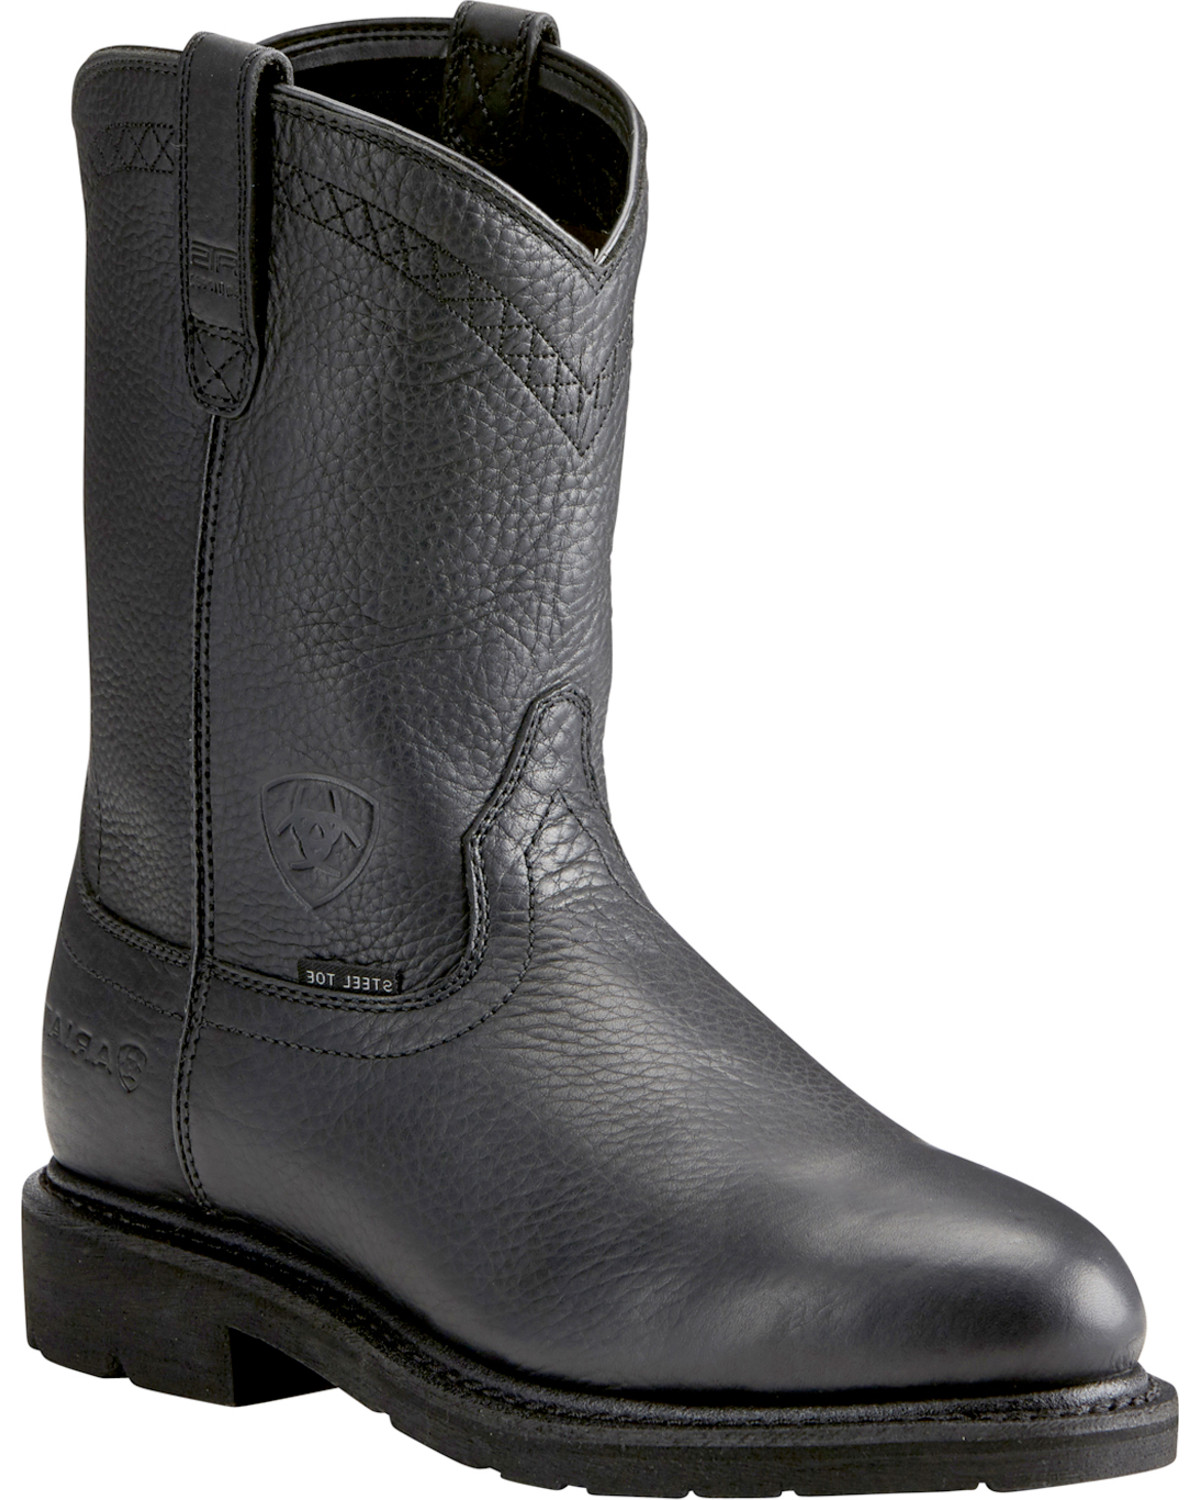 Black Work Boots - Steel Toe | Boot Barn